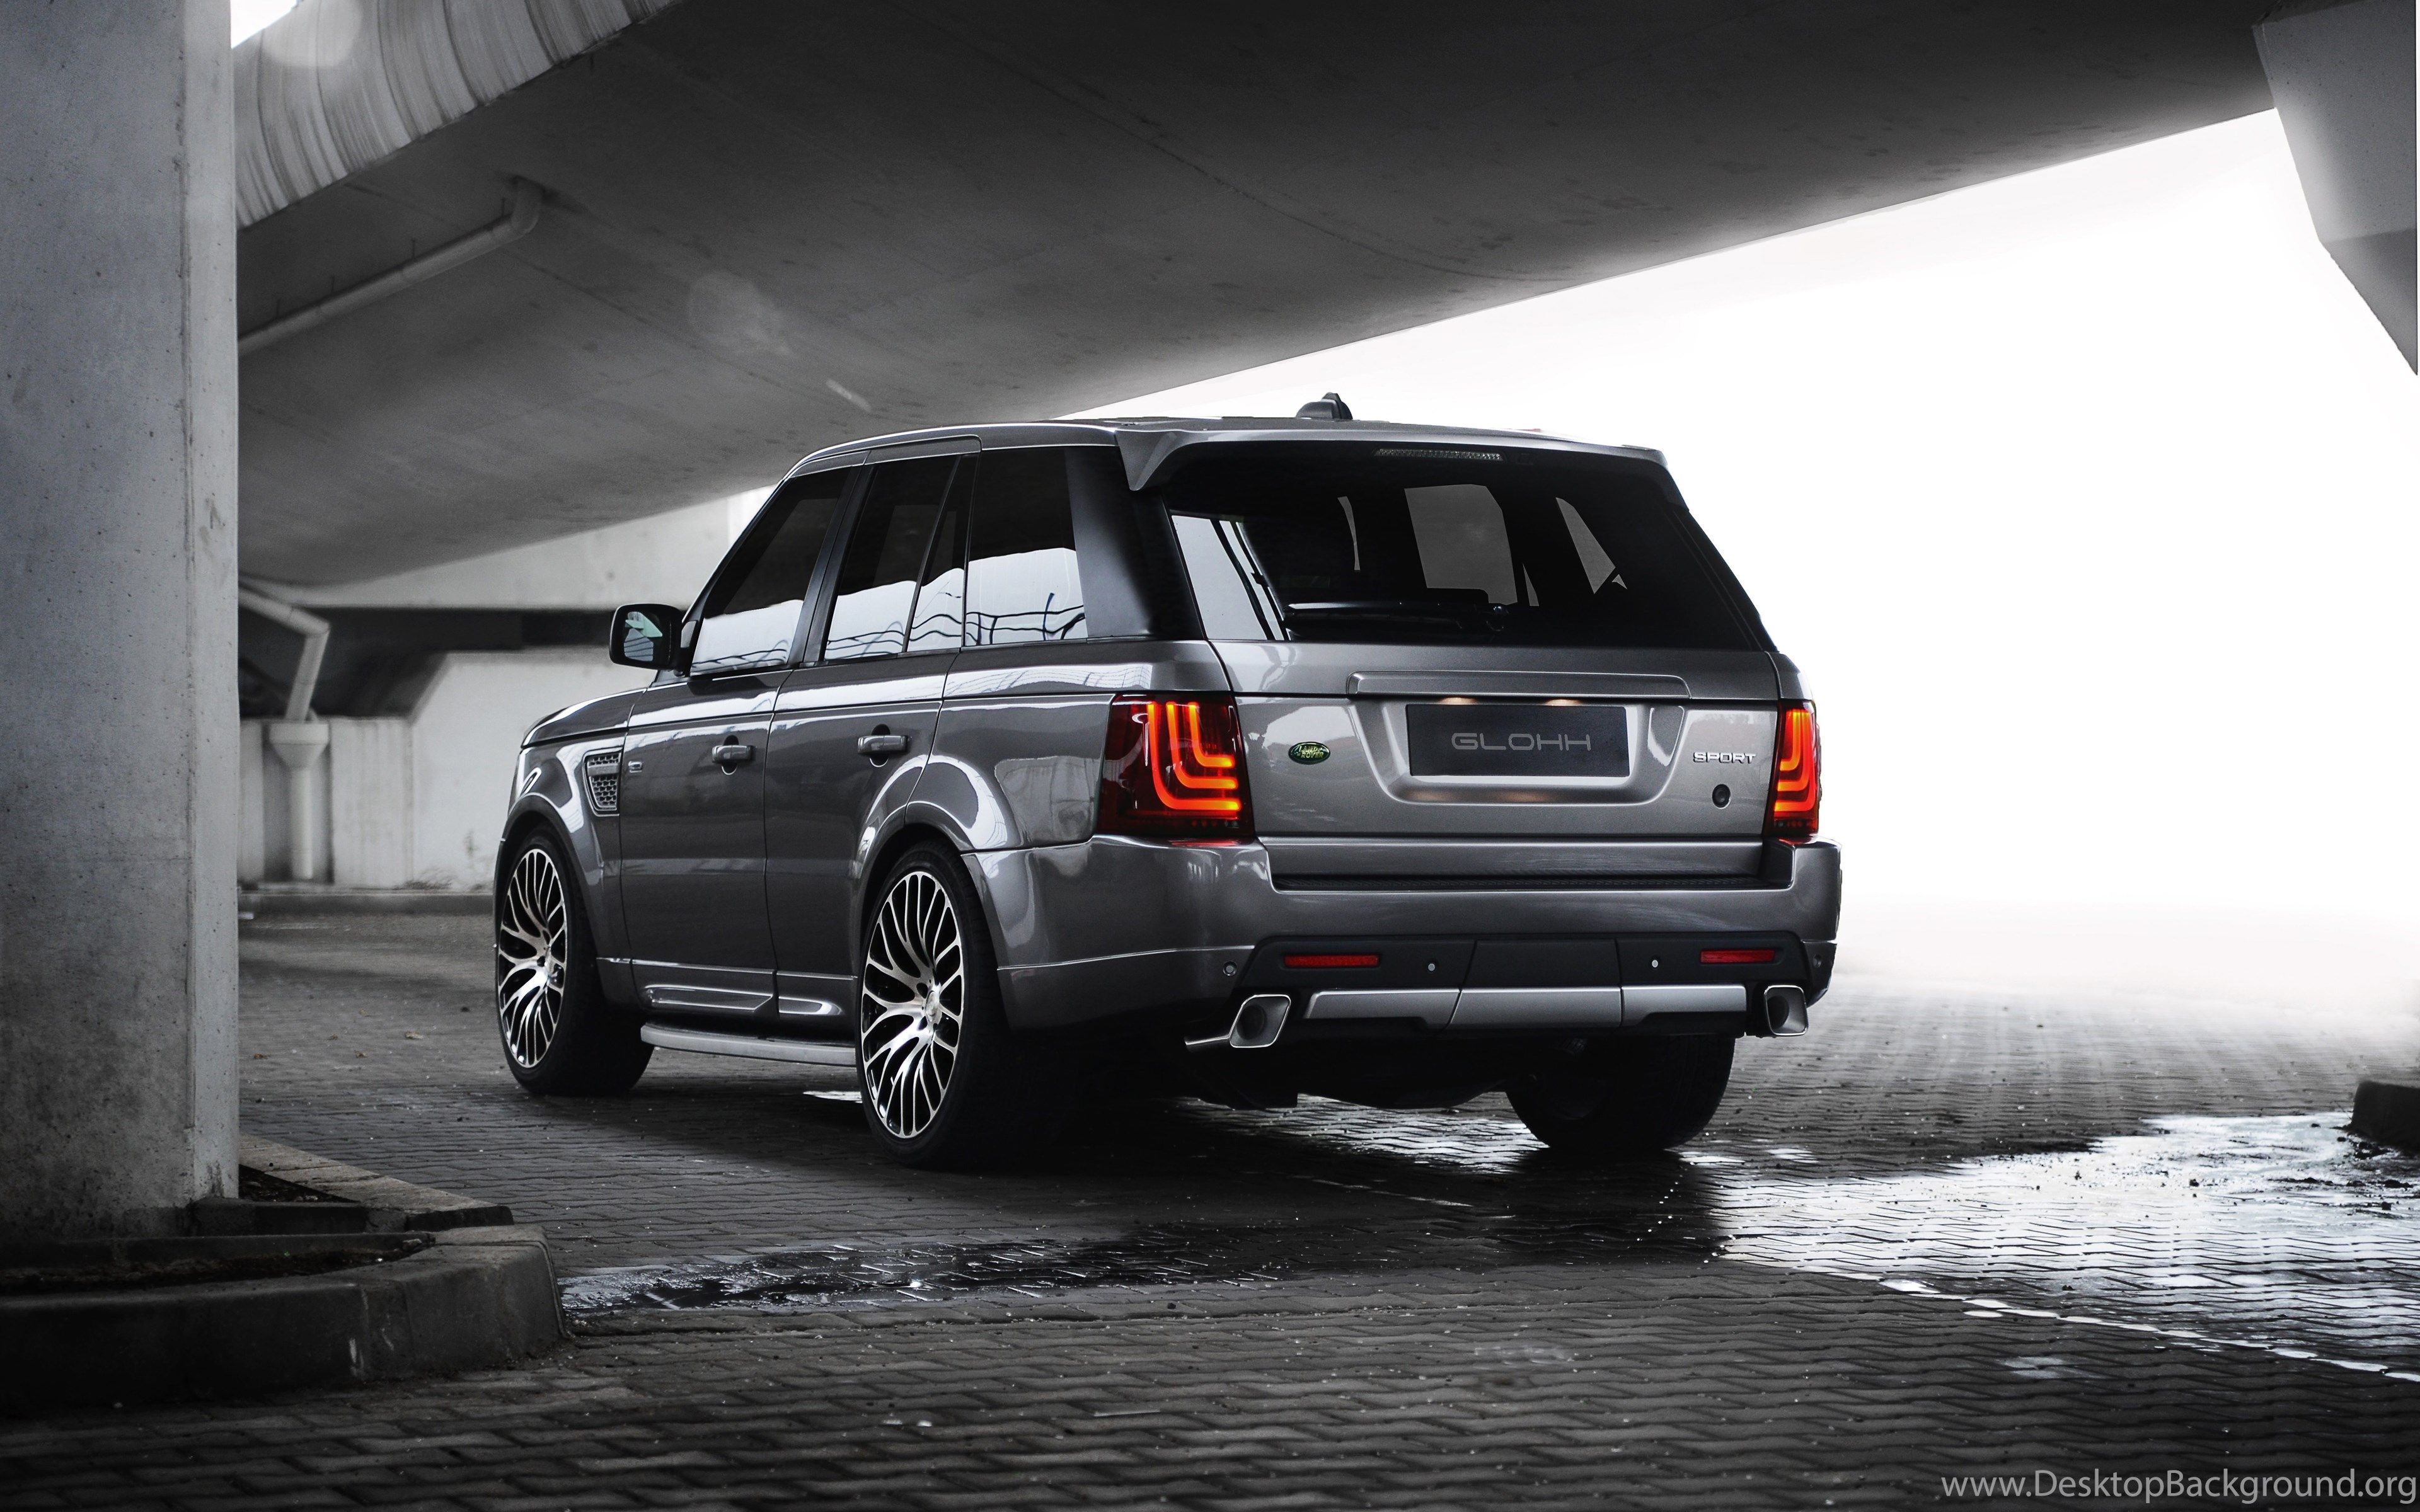 GLOHH Land Rover Range Rover Sport Black SUV Wallpaper HD. Free. Desktop Background